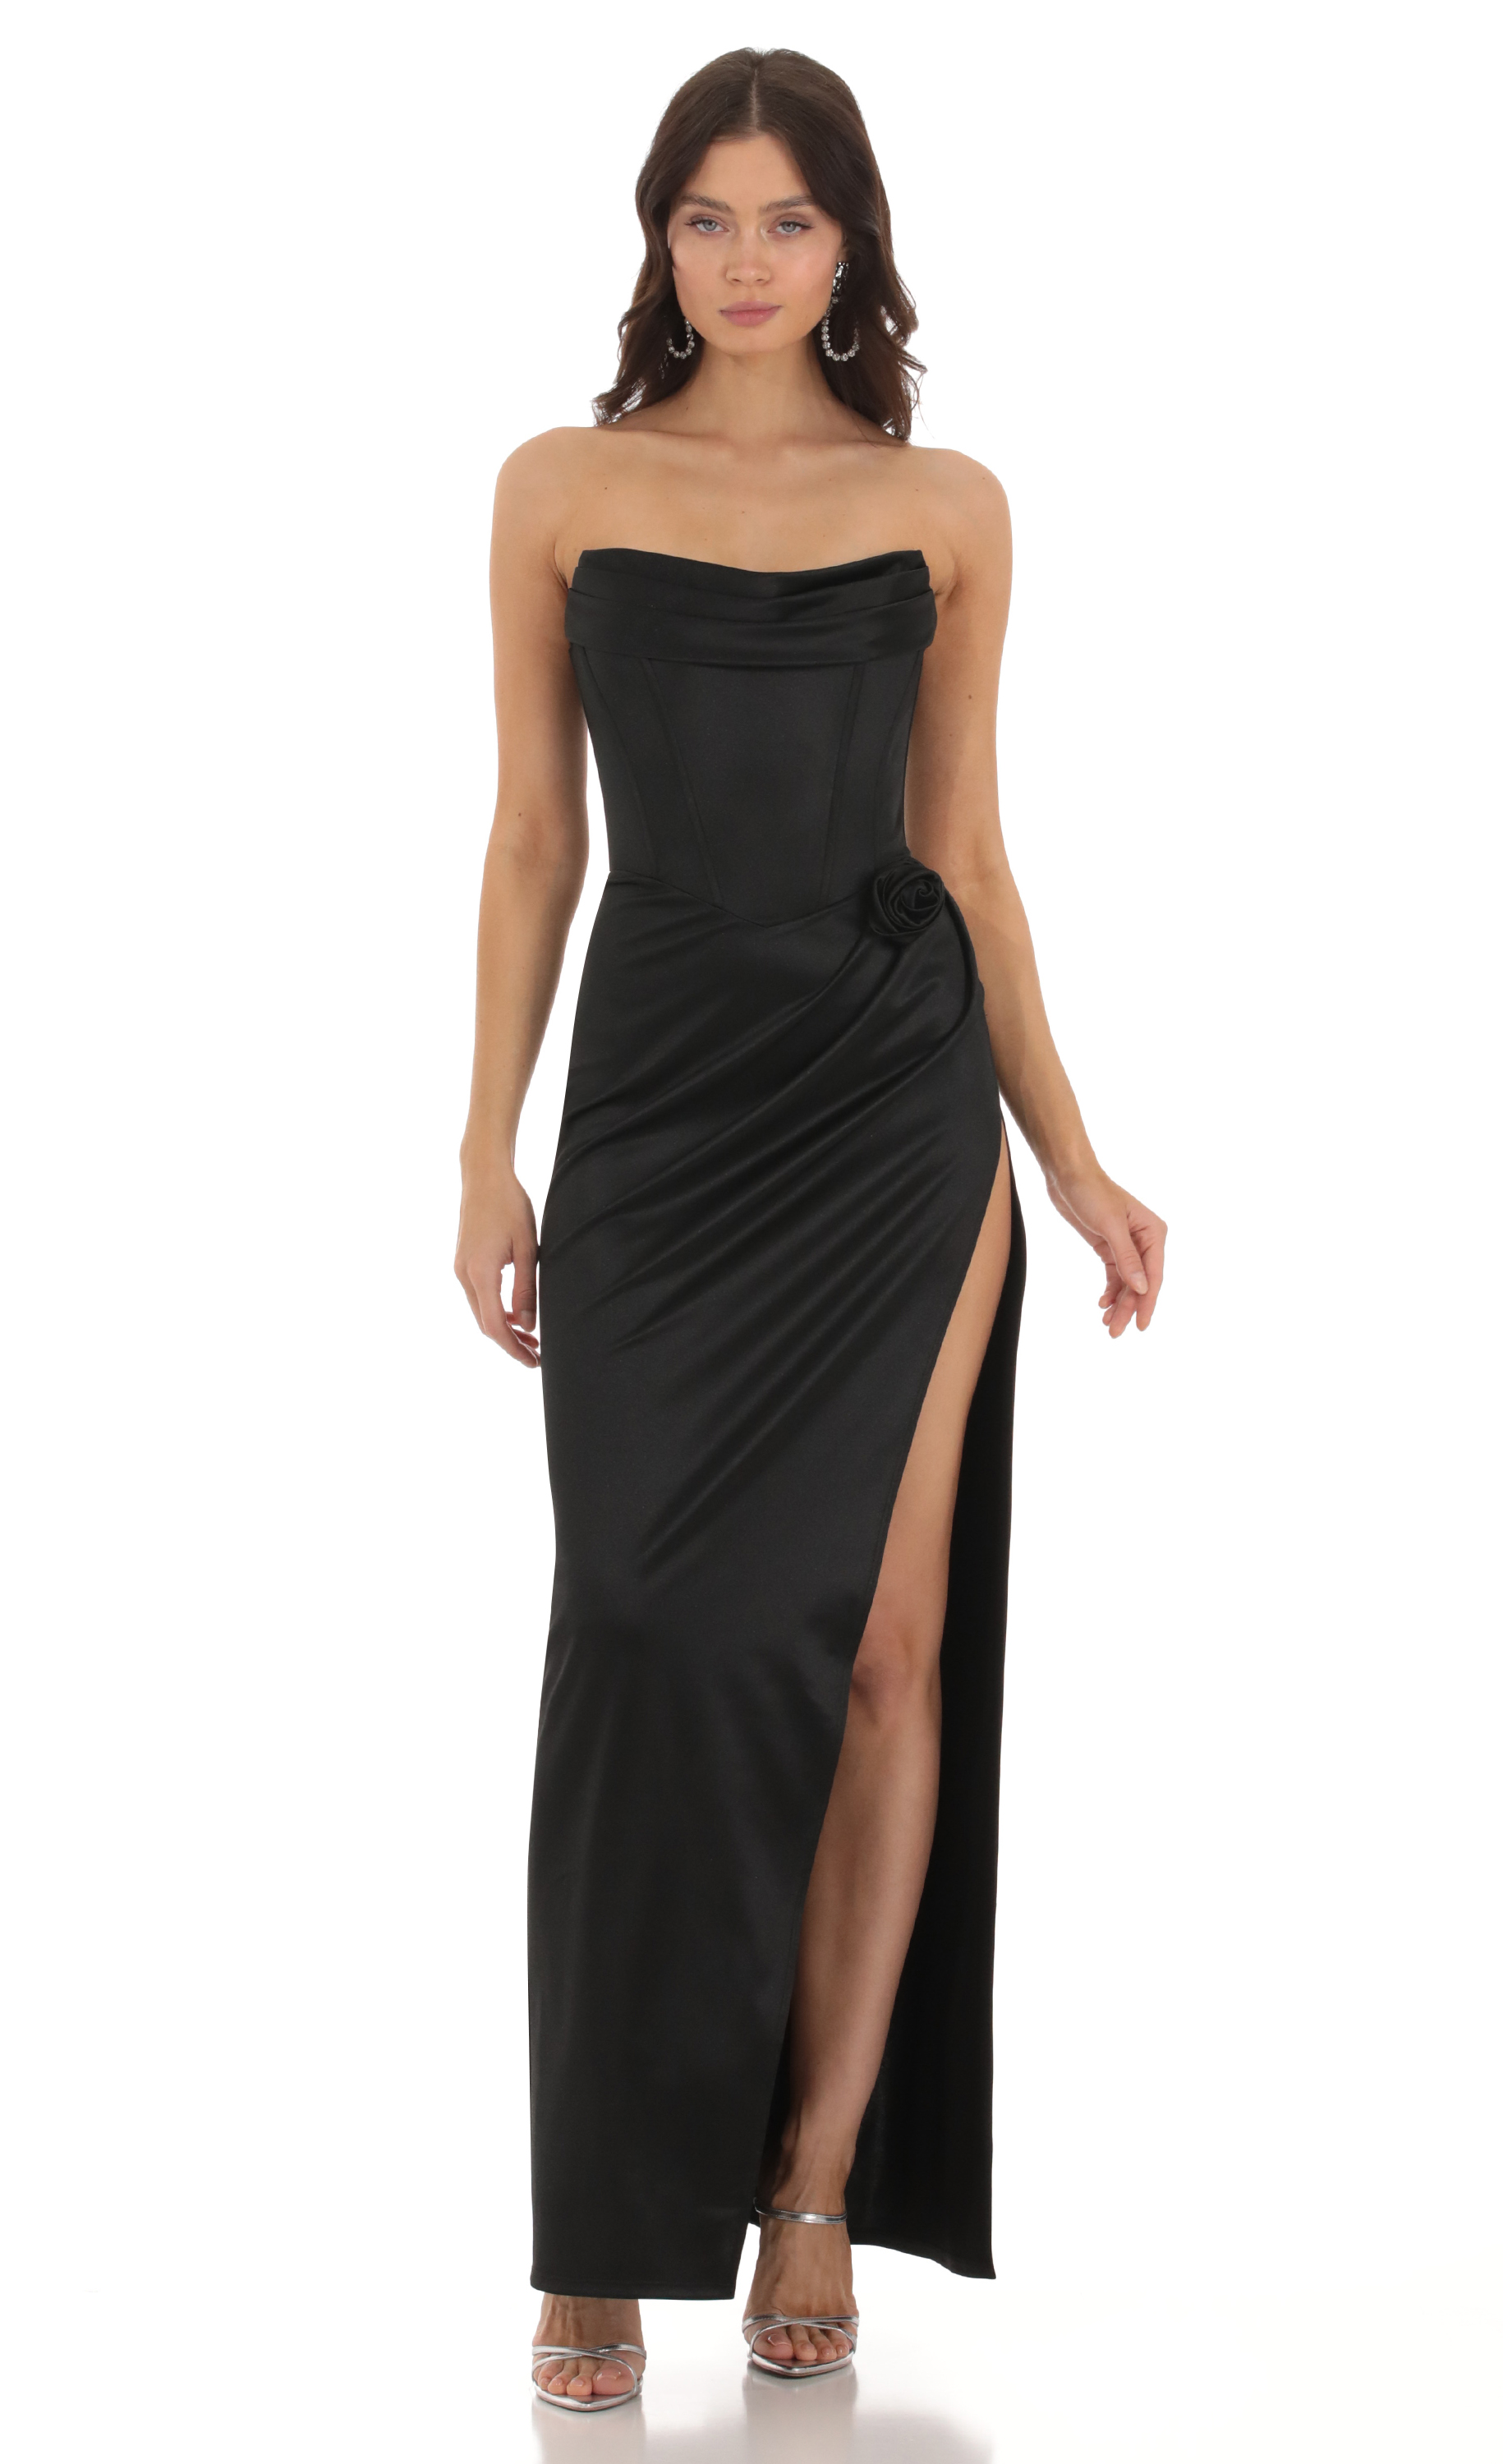 Jayella Flower Strapless Maxi Dress in Black